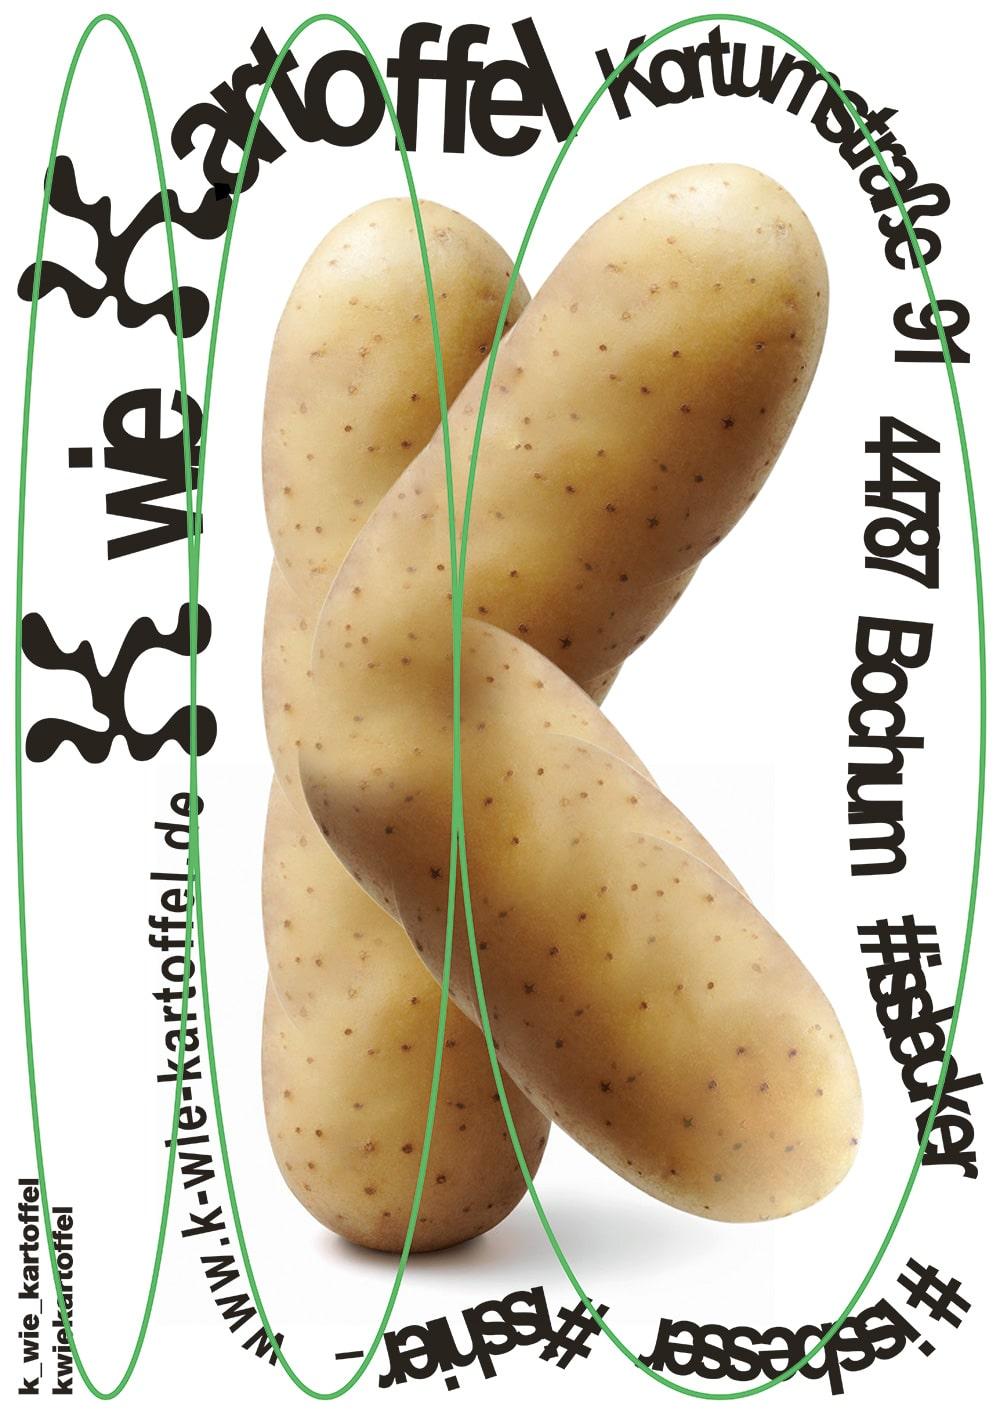 Kreative Kartoffel-Identitäten